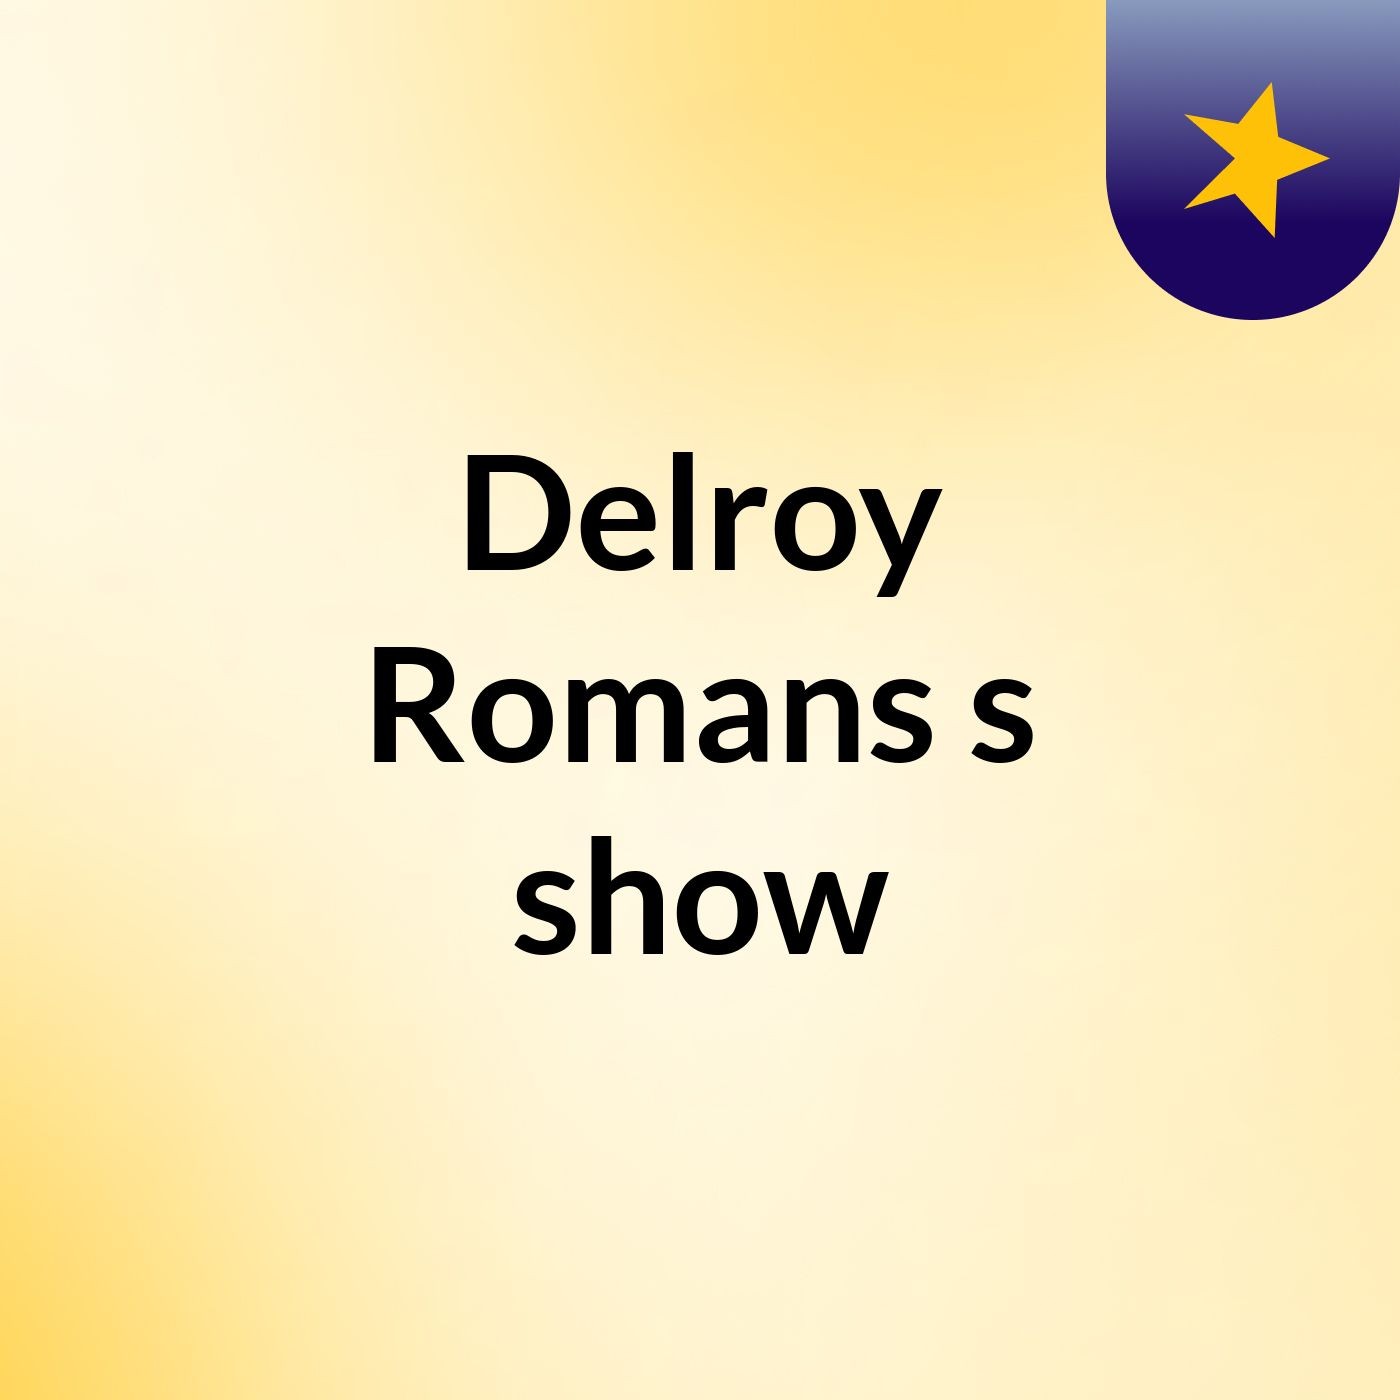 Delroy Romans's show